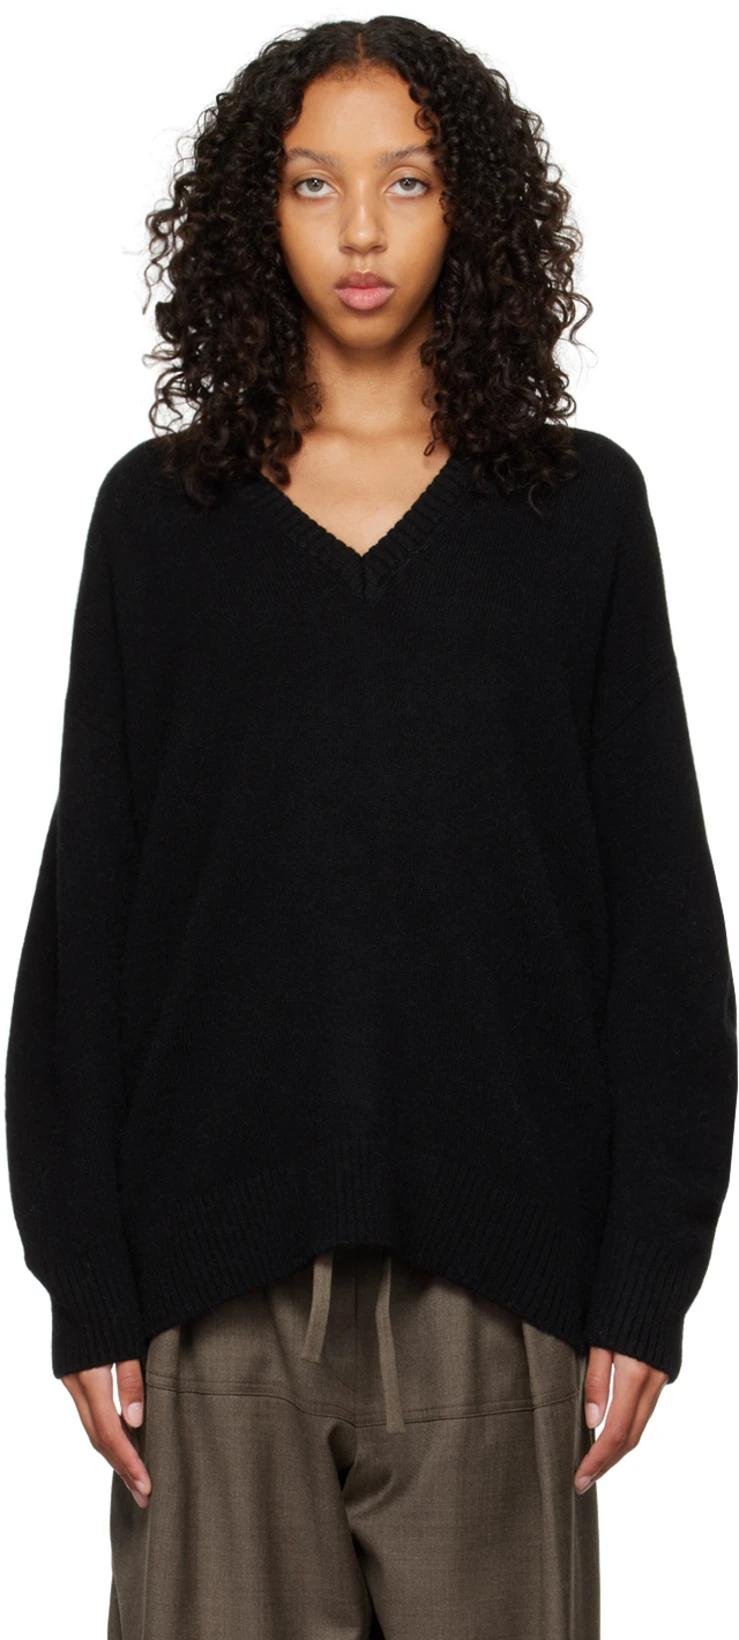 Black V-Neck Sweater by CAES